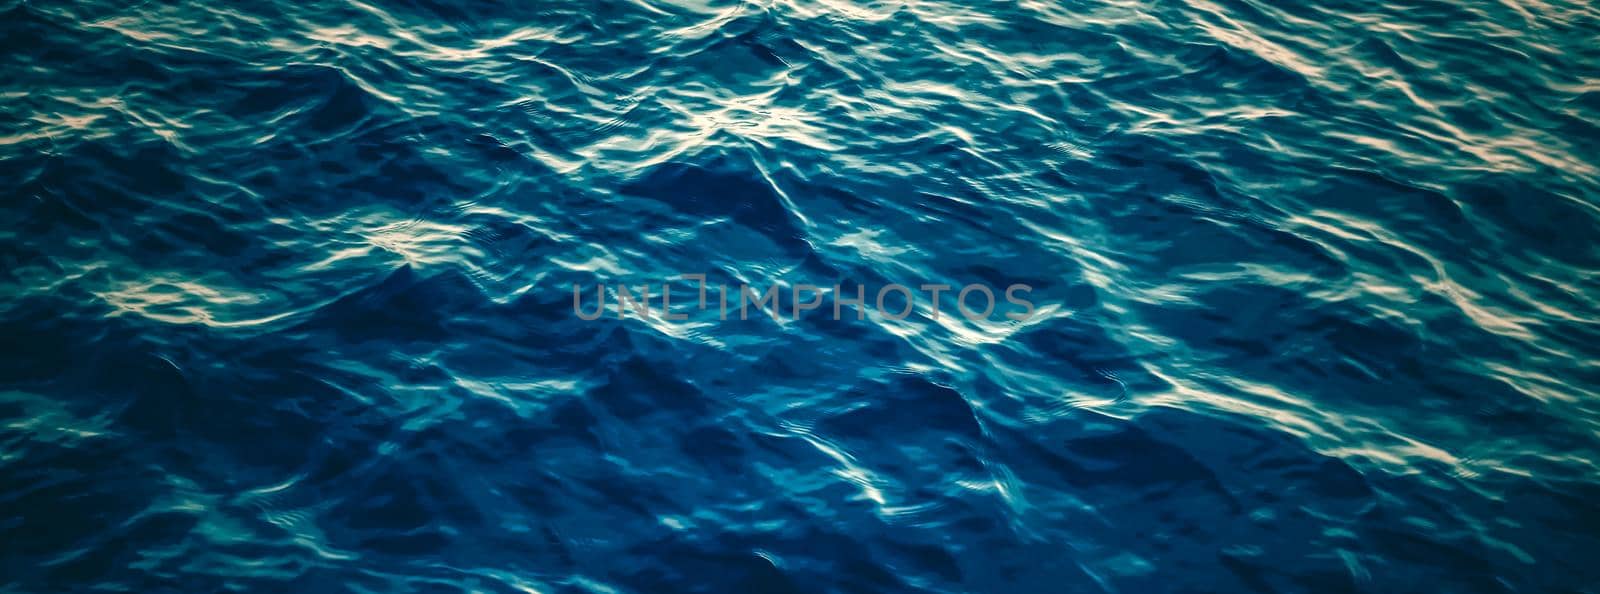 Deep blue ocean water texture, dark sea waves background as nature and environmental design.